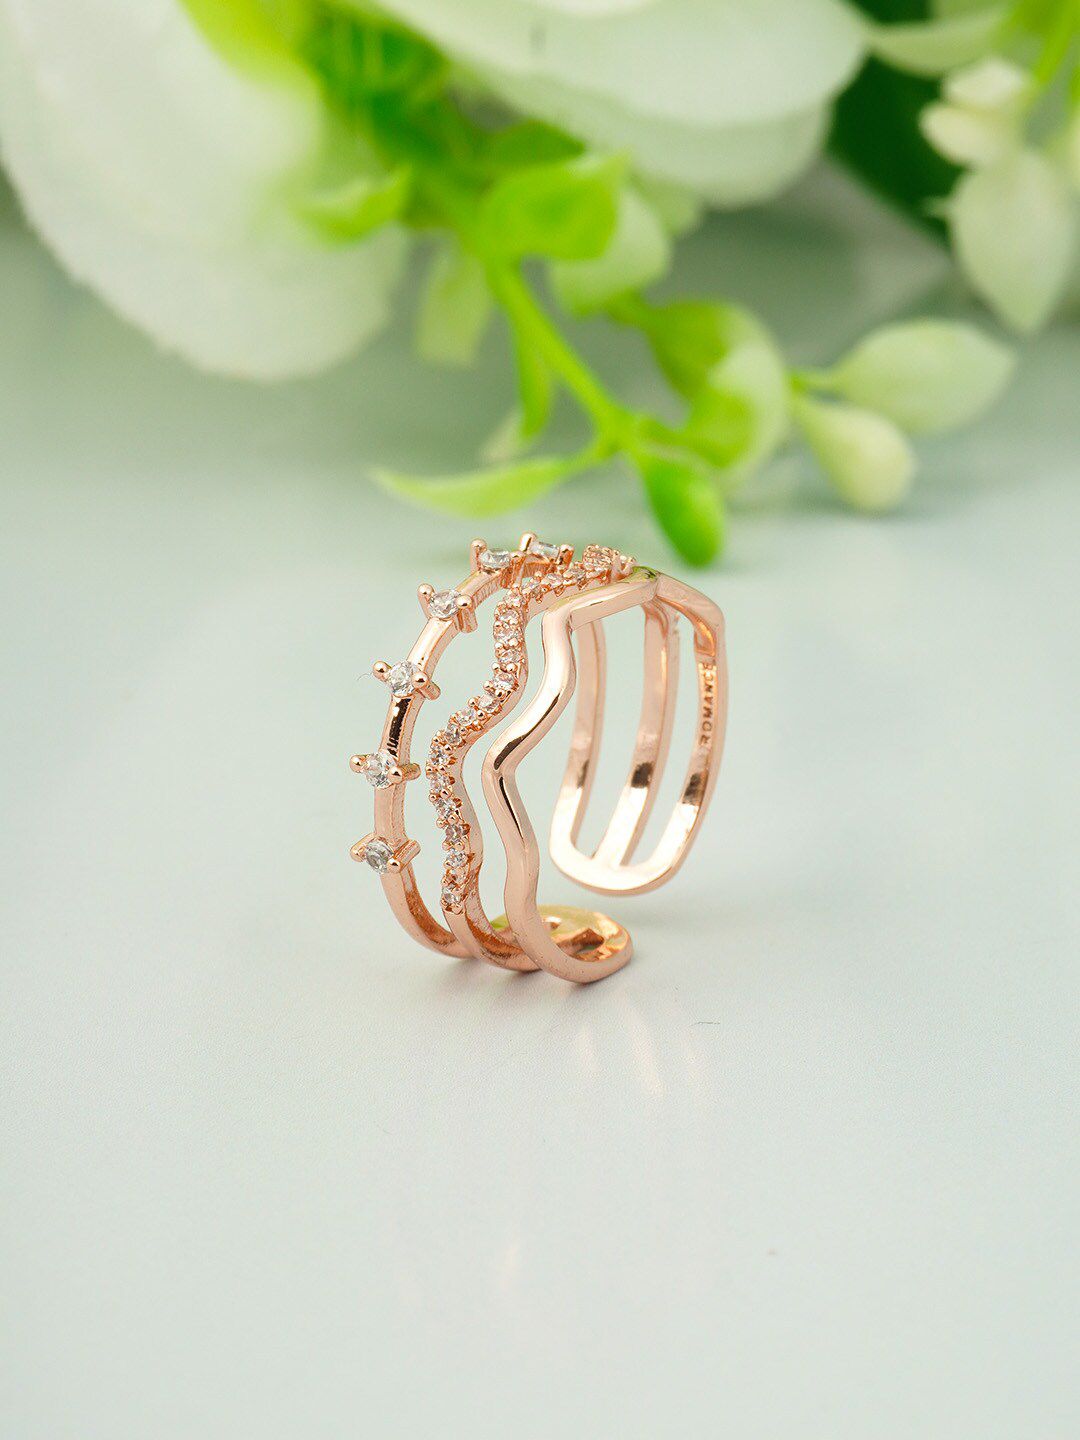 Ferosh Rose Gold-Toned White Stone Studded Adjustable Finger Ring Price in India